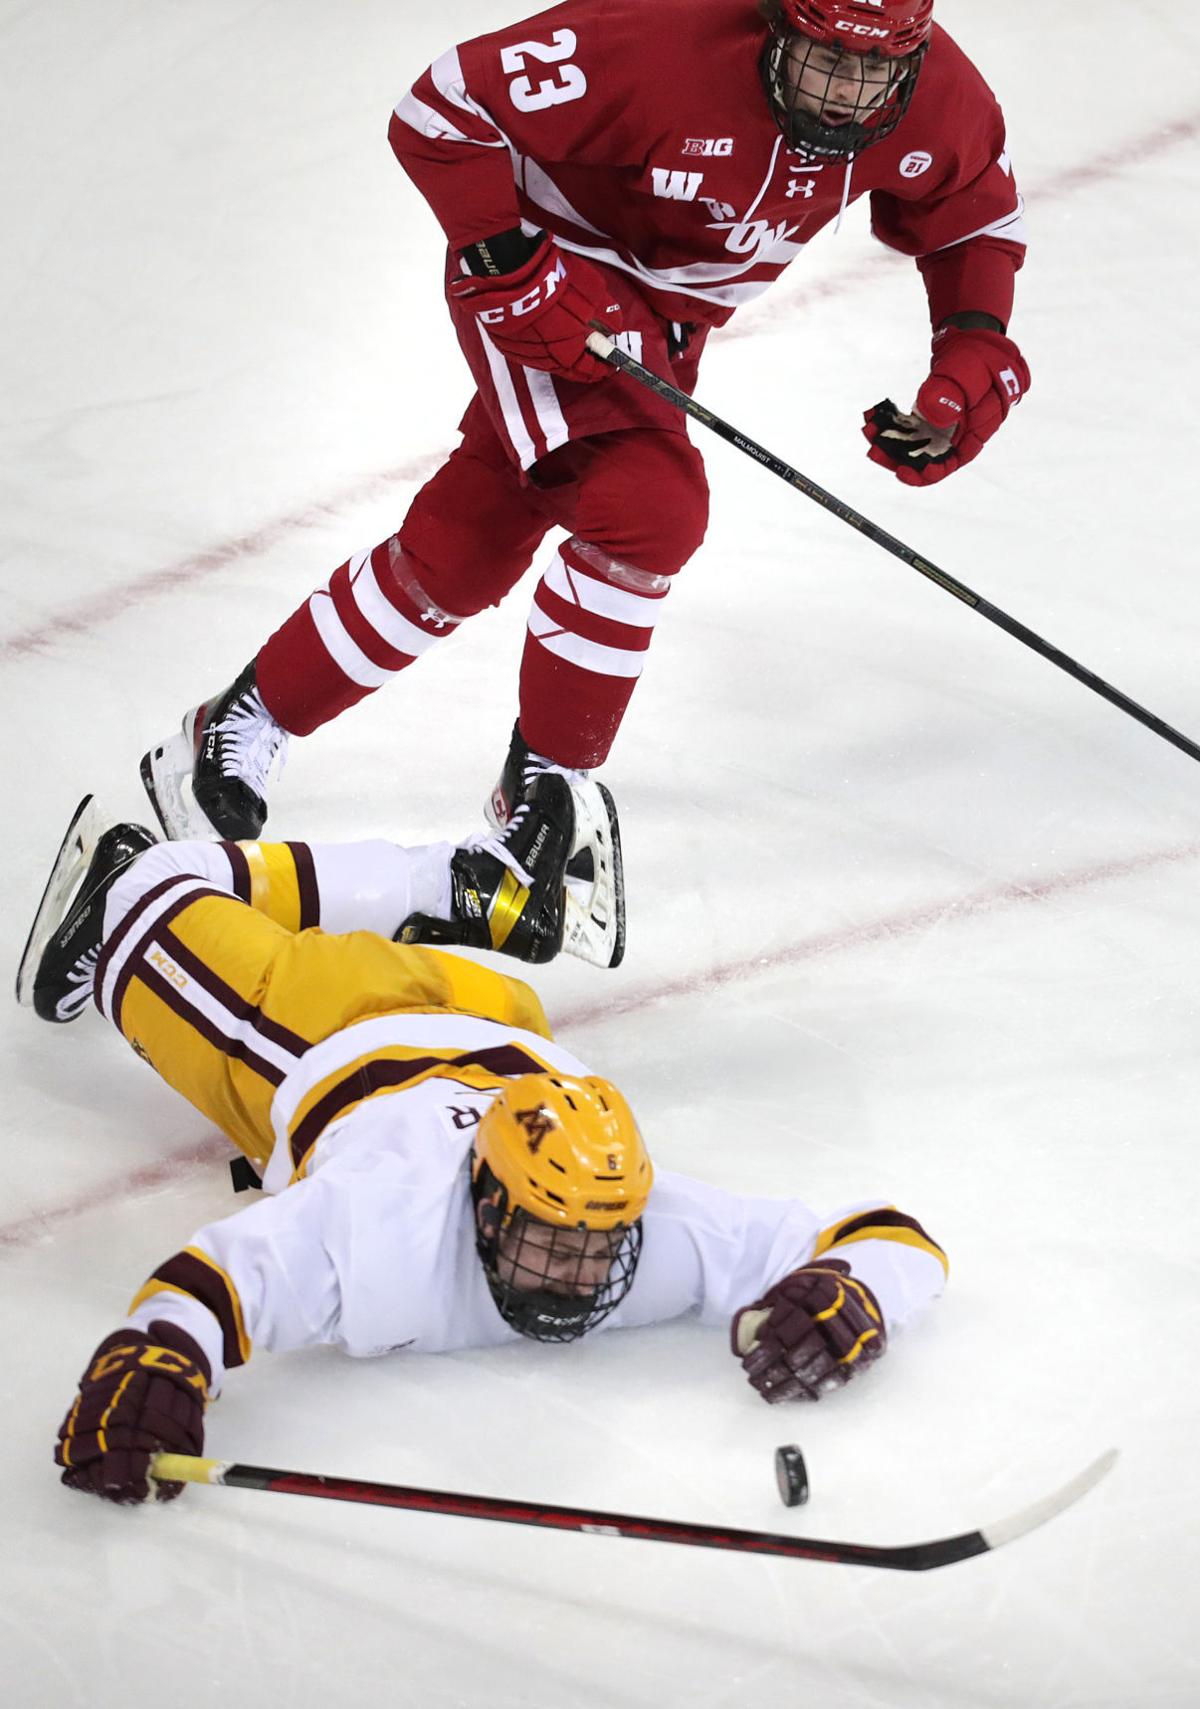 Badger hockey takes down No. 1 Minnesota